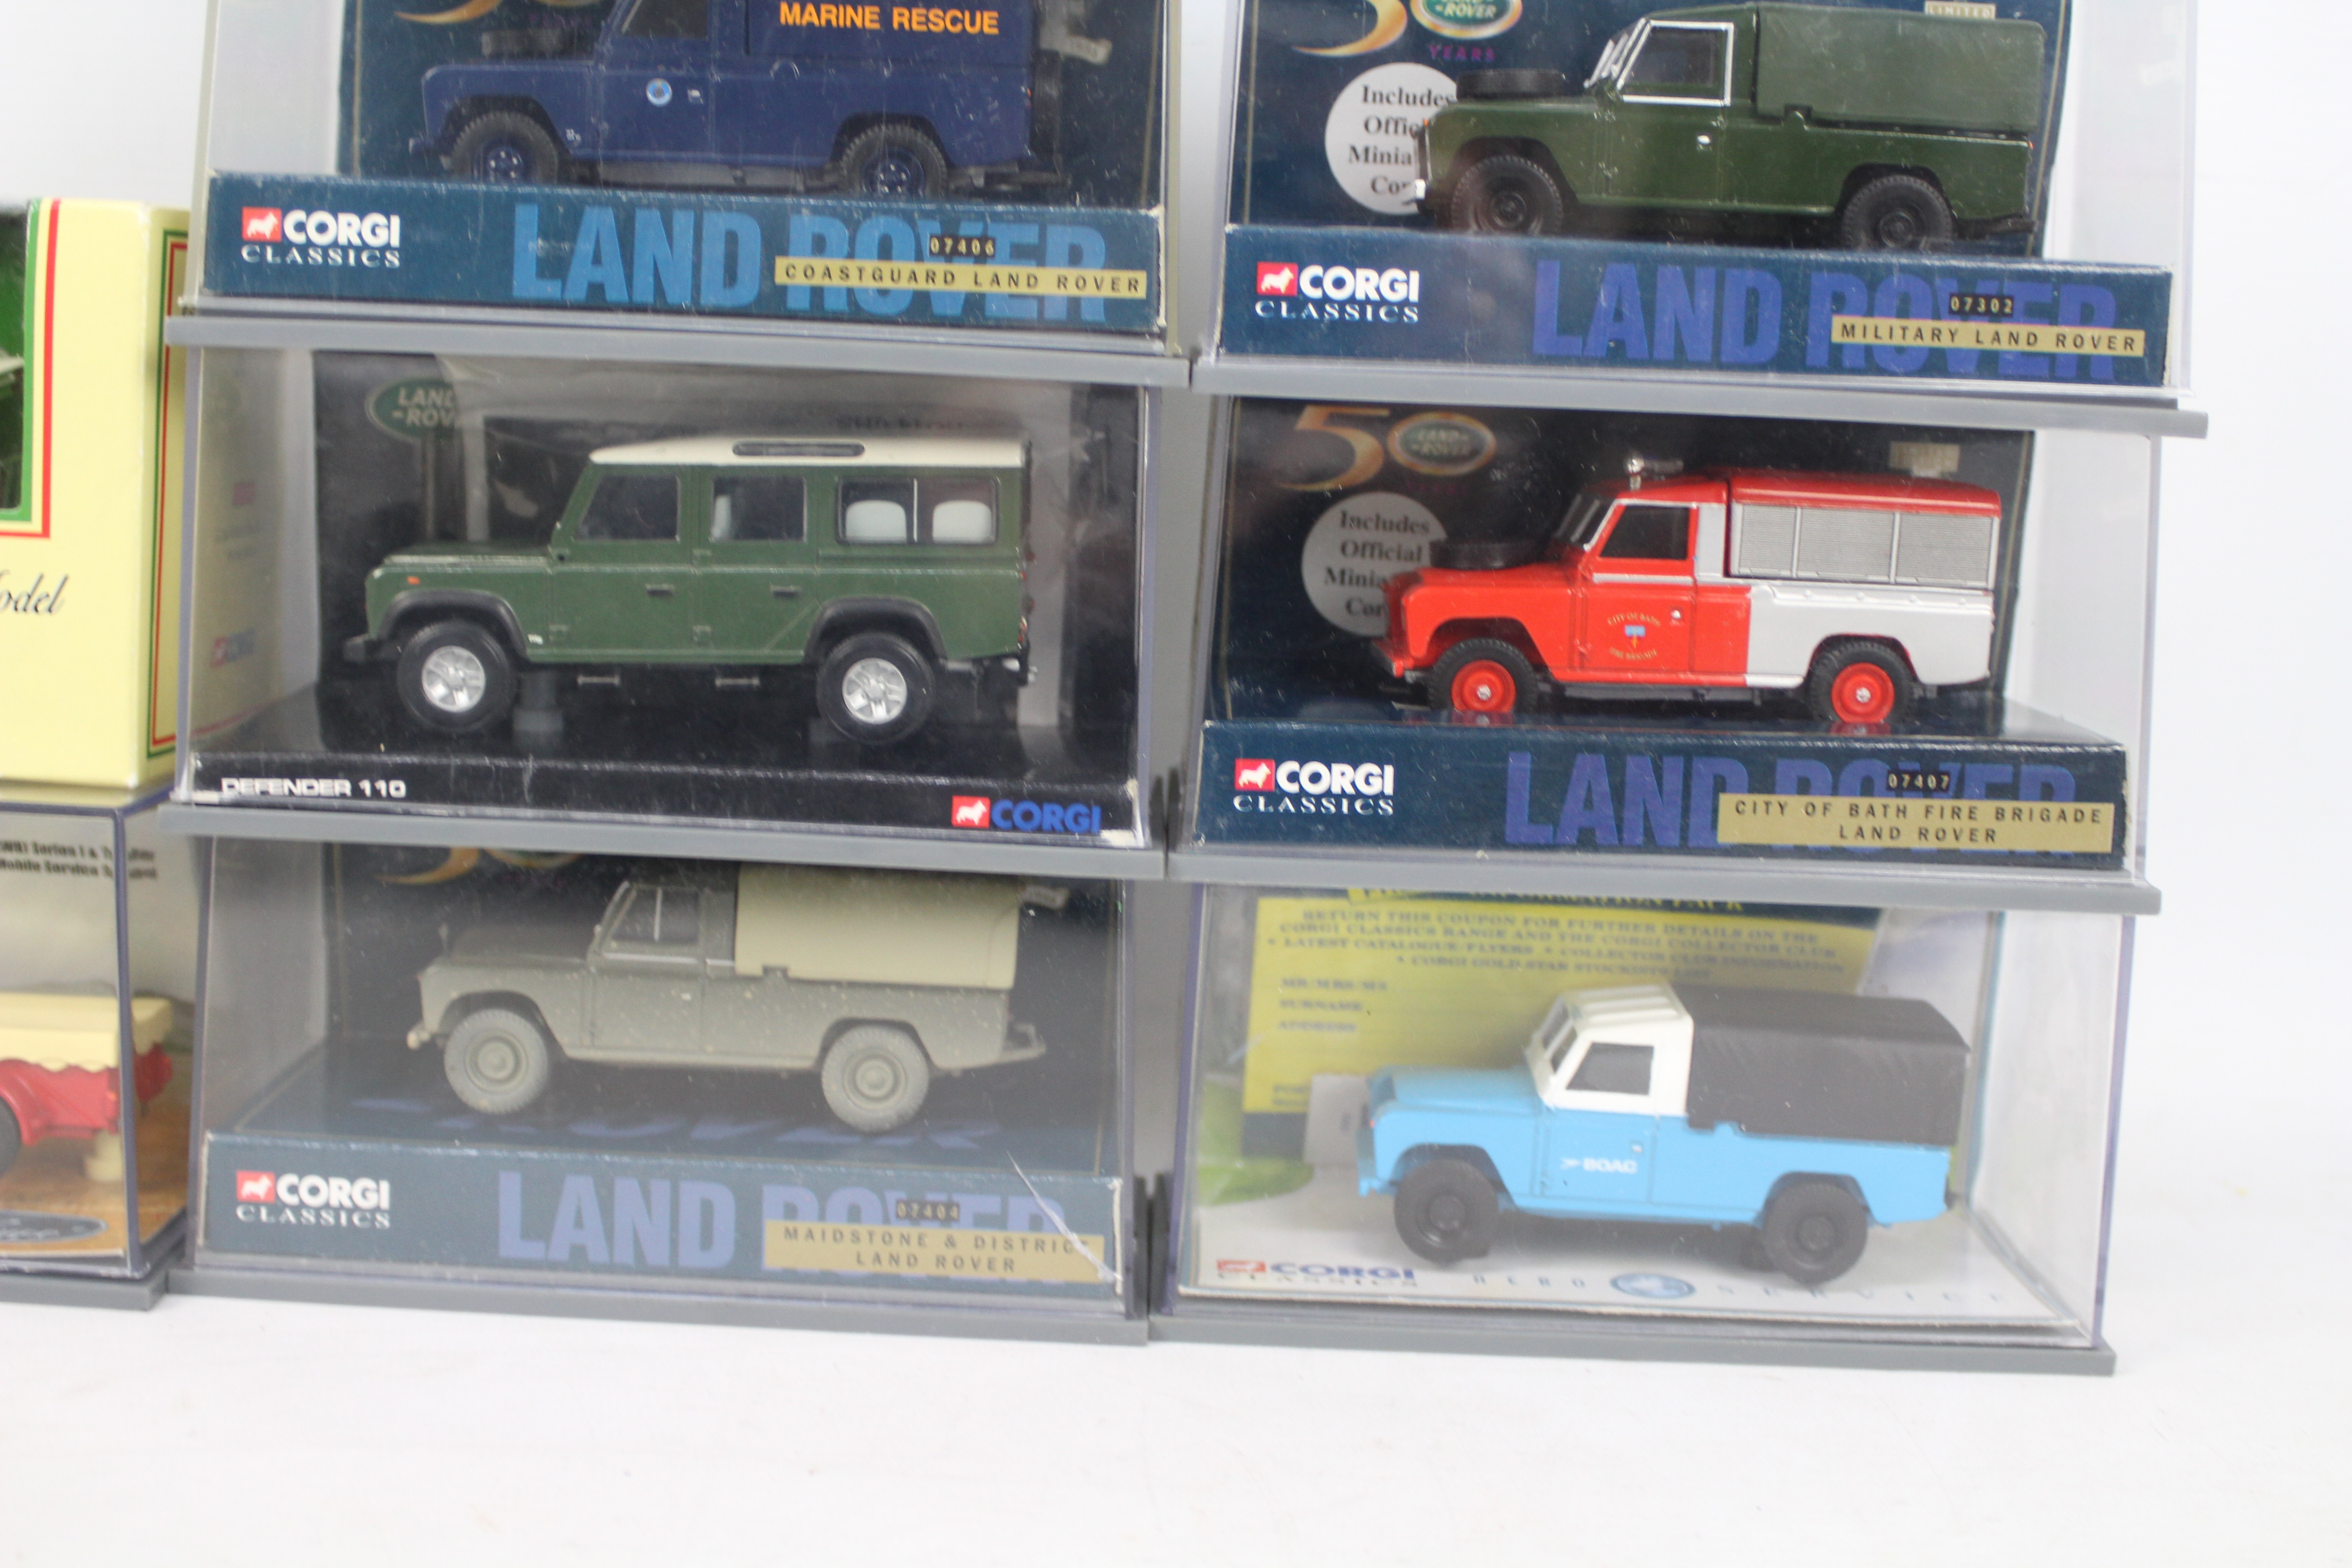 Corgi Classics - A troop of nine boxed diecast model Land Rovers from various Corgi ranges. - Bild 4 aus 5